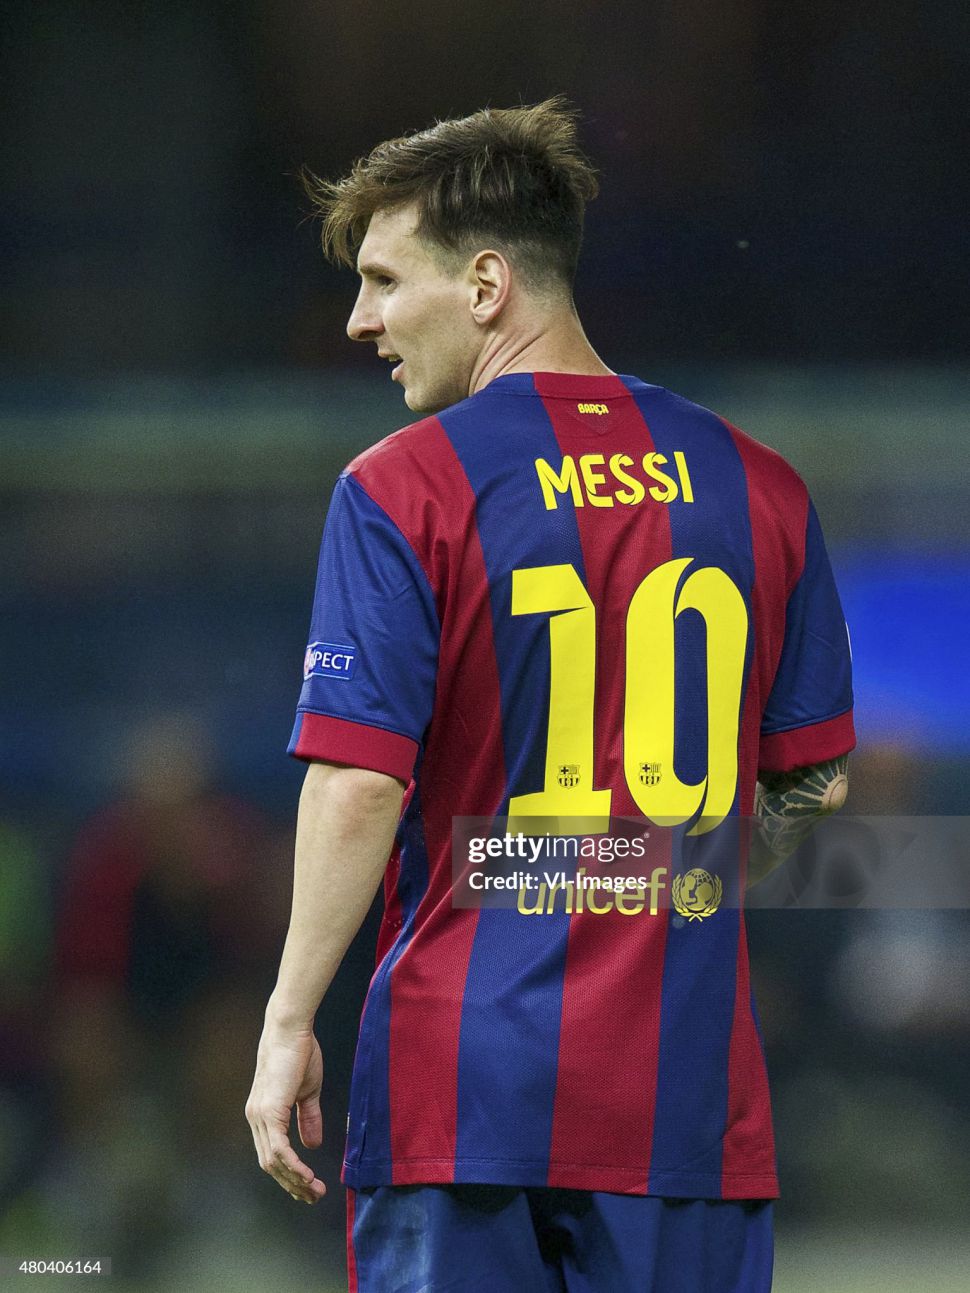 Font Messi 10 Barcelona 2014 2015 nameset home player official